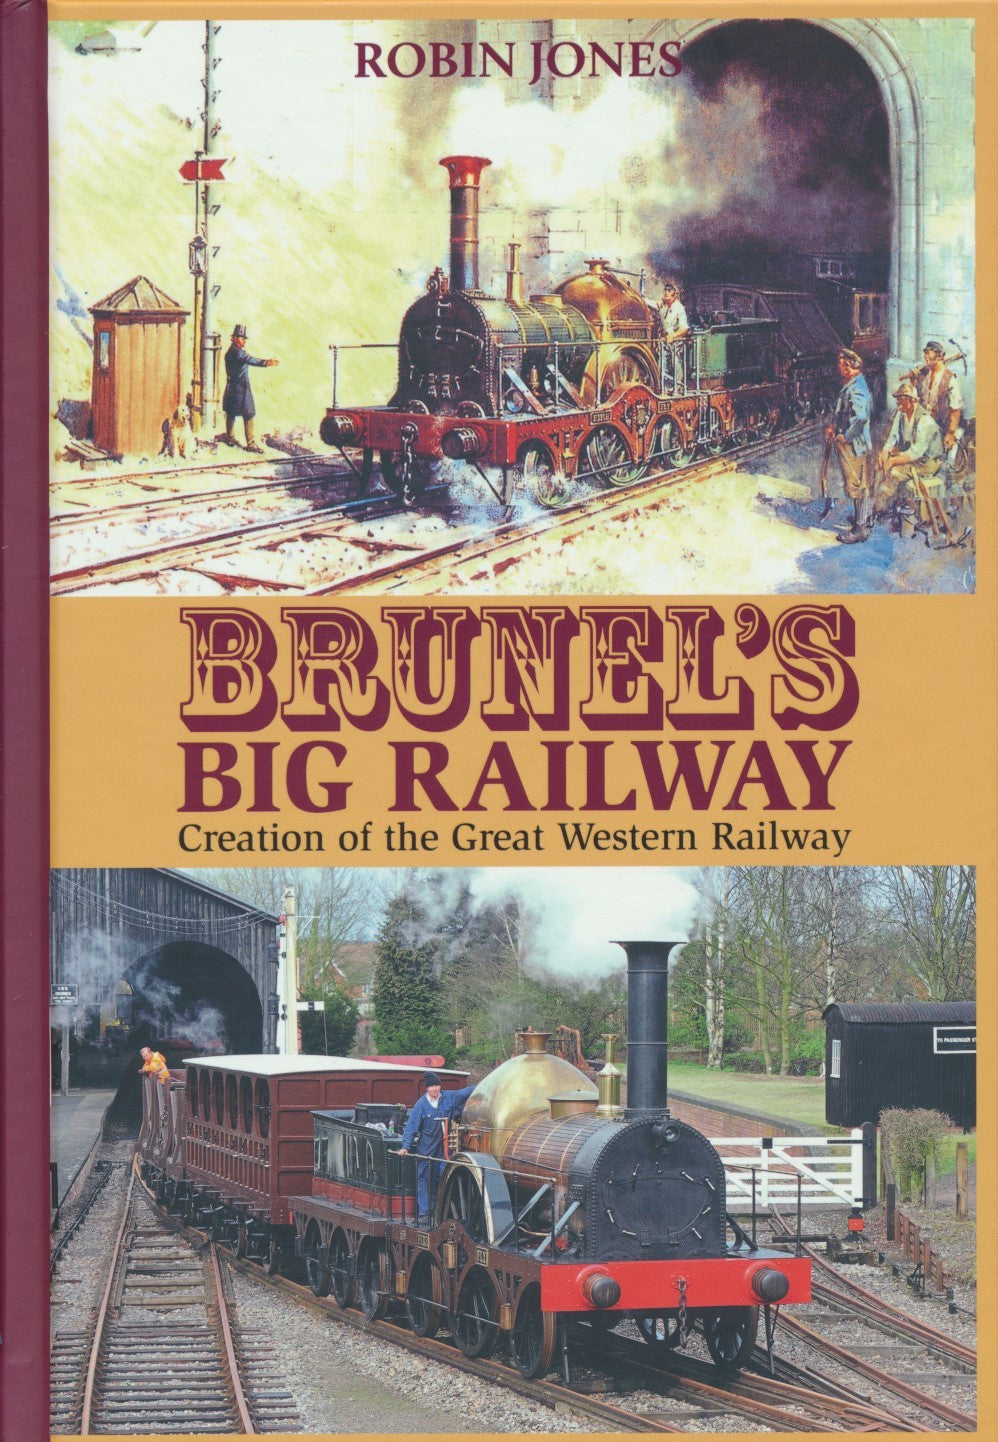 Brunel's Big Railway - Creation of the Great Western Railway